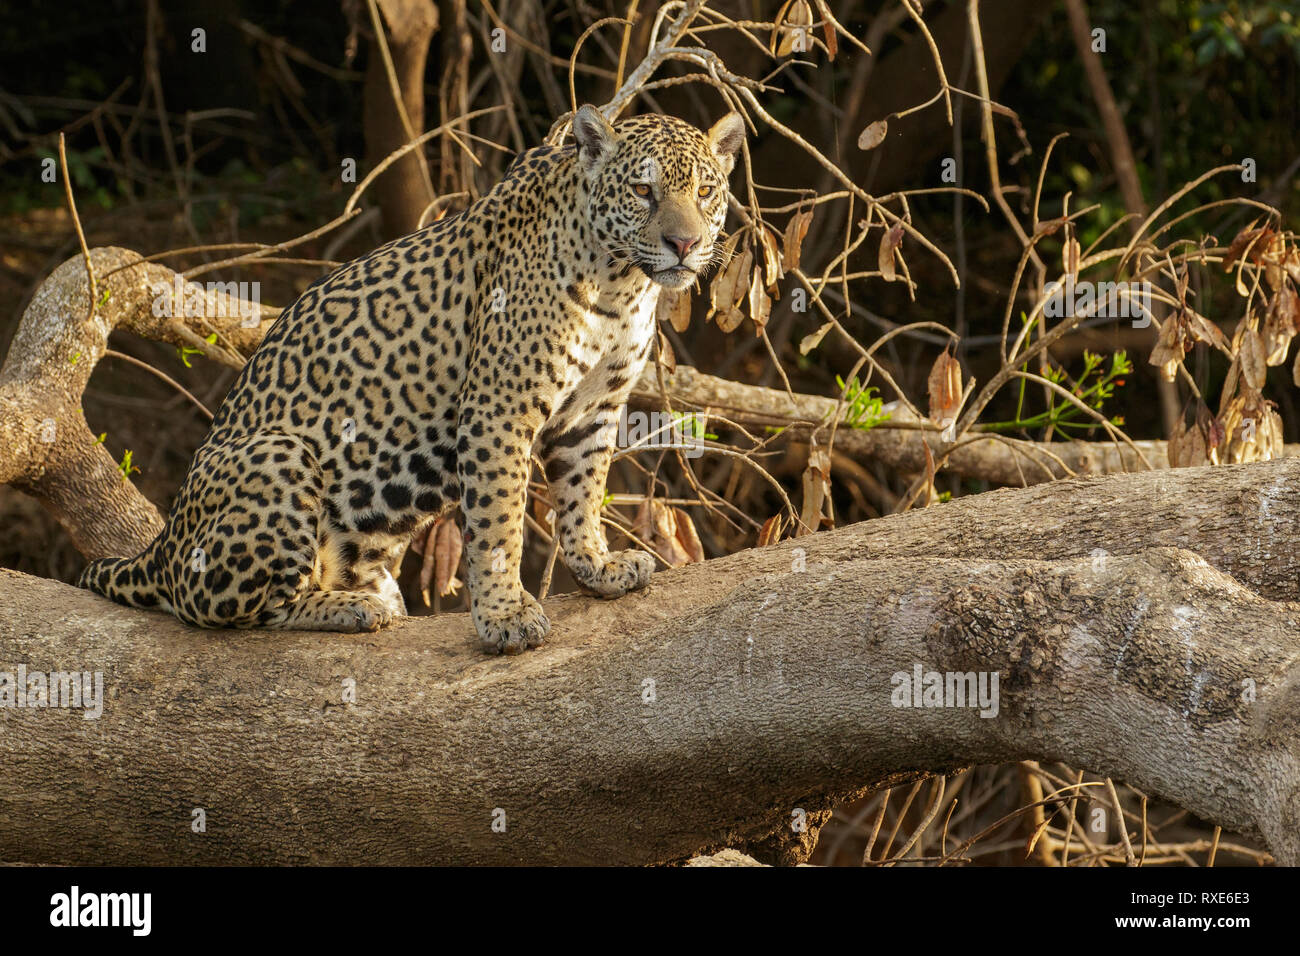 Una Jaguar nel Pantalal Regione del Brasile. Foto Stock